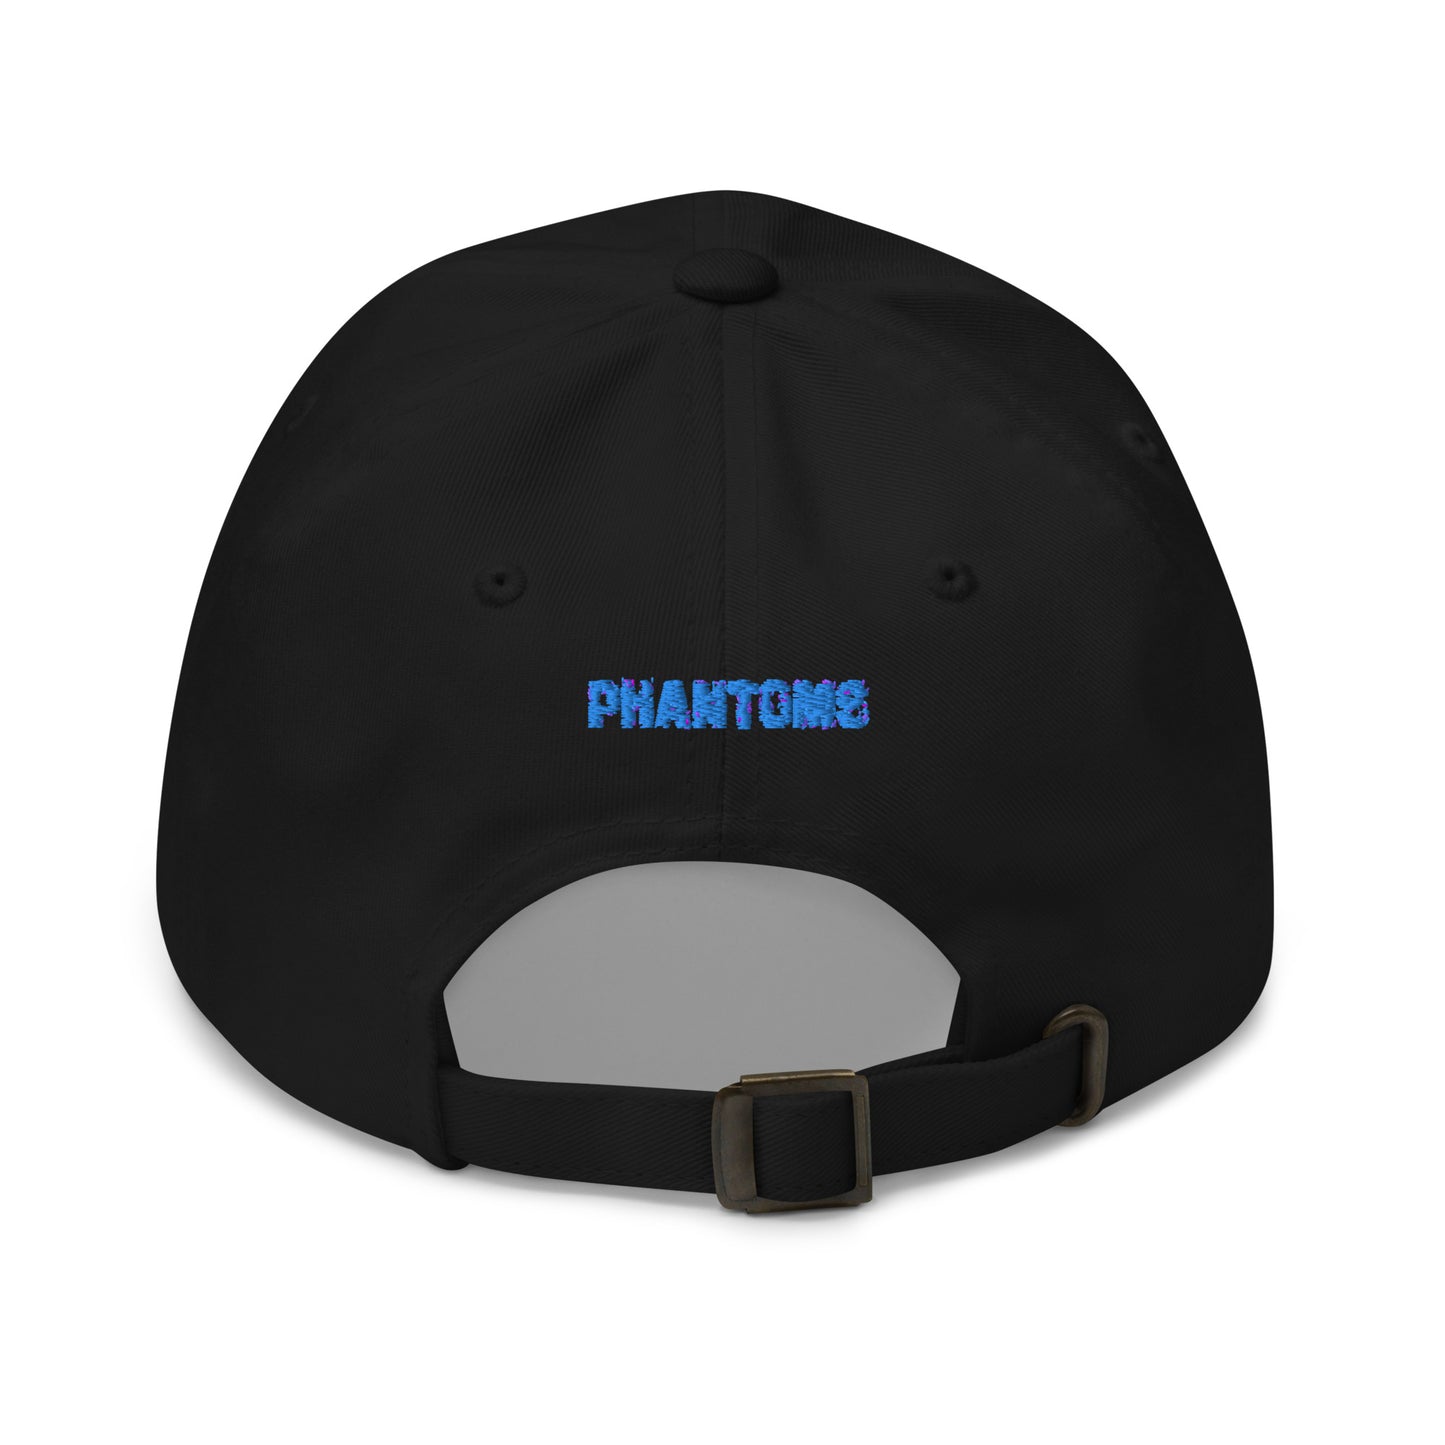 the Phantoms Dad hat